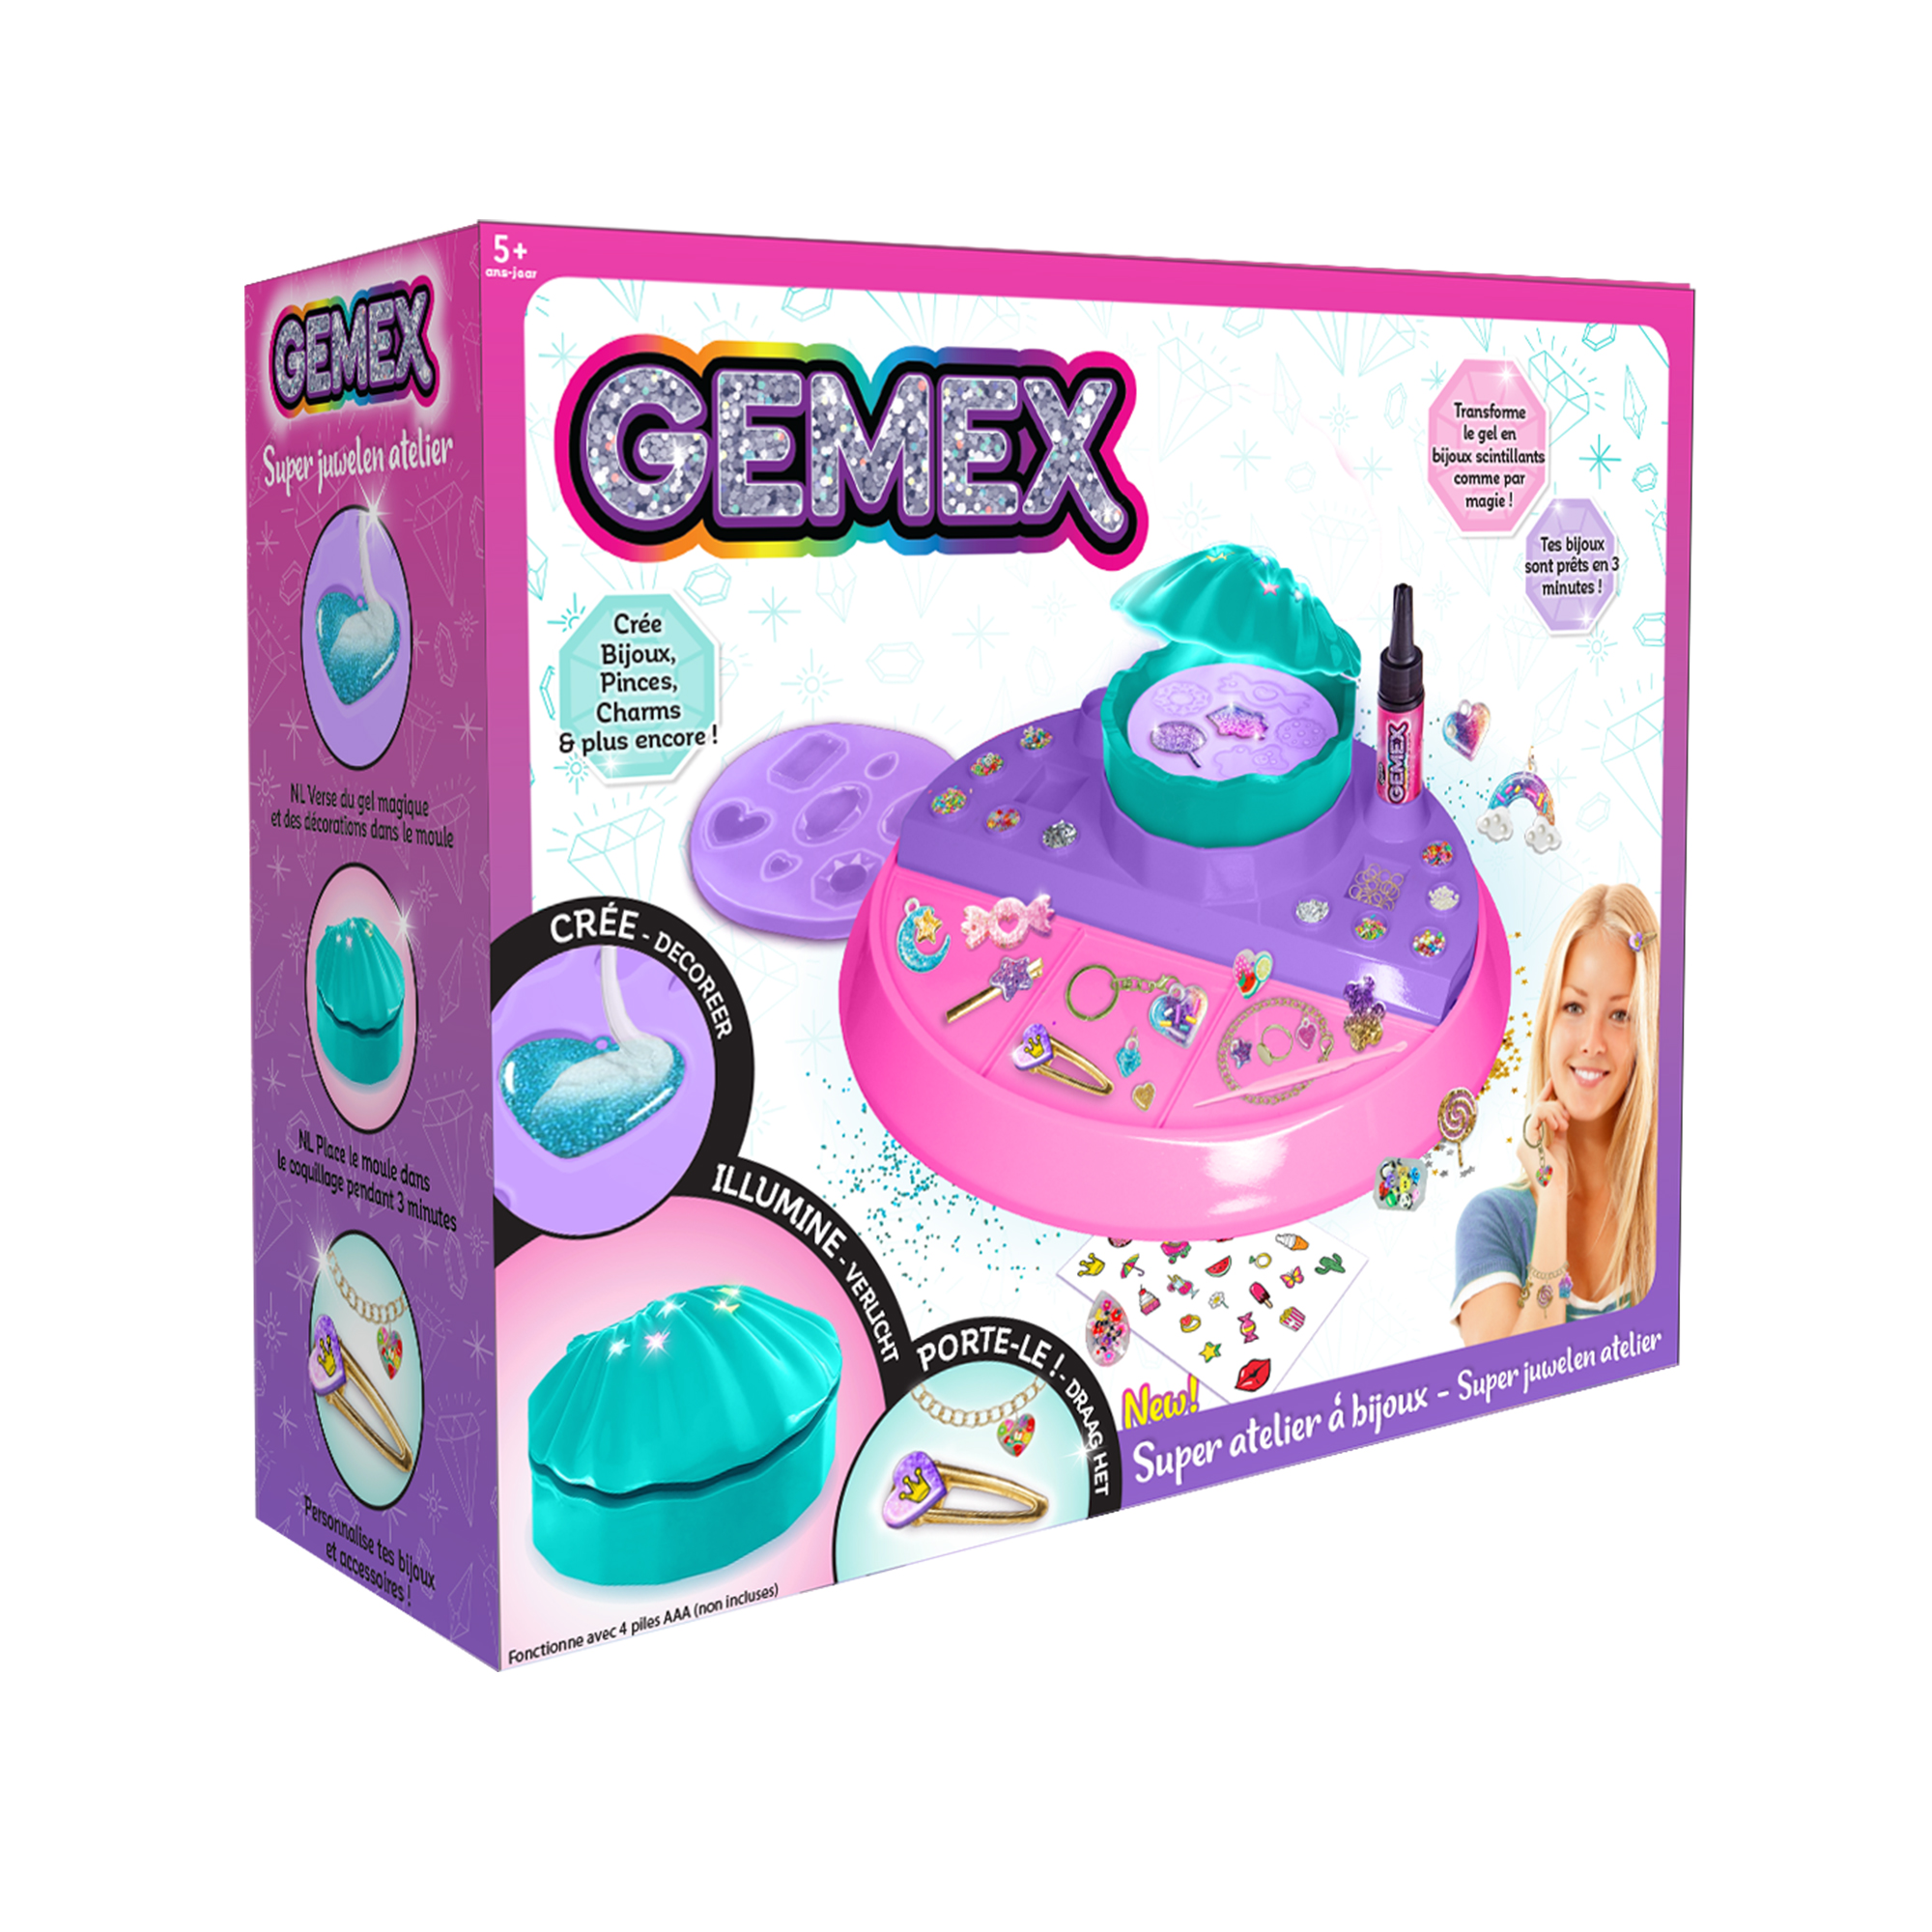 Gemex Super atelier NG pack